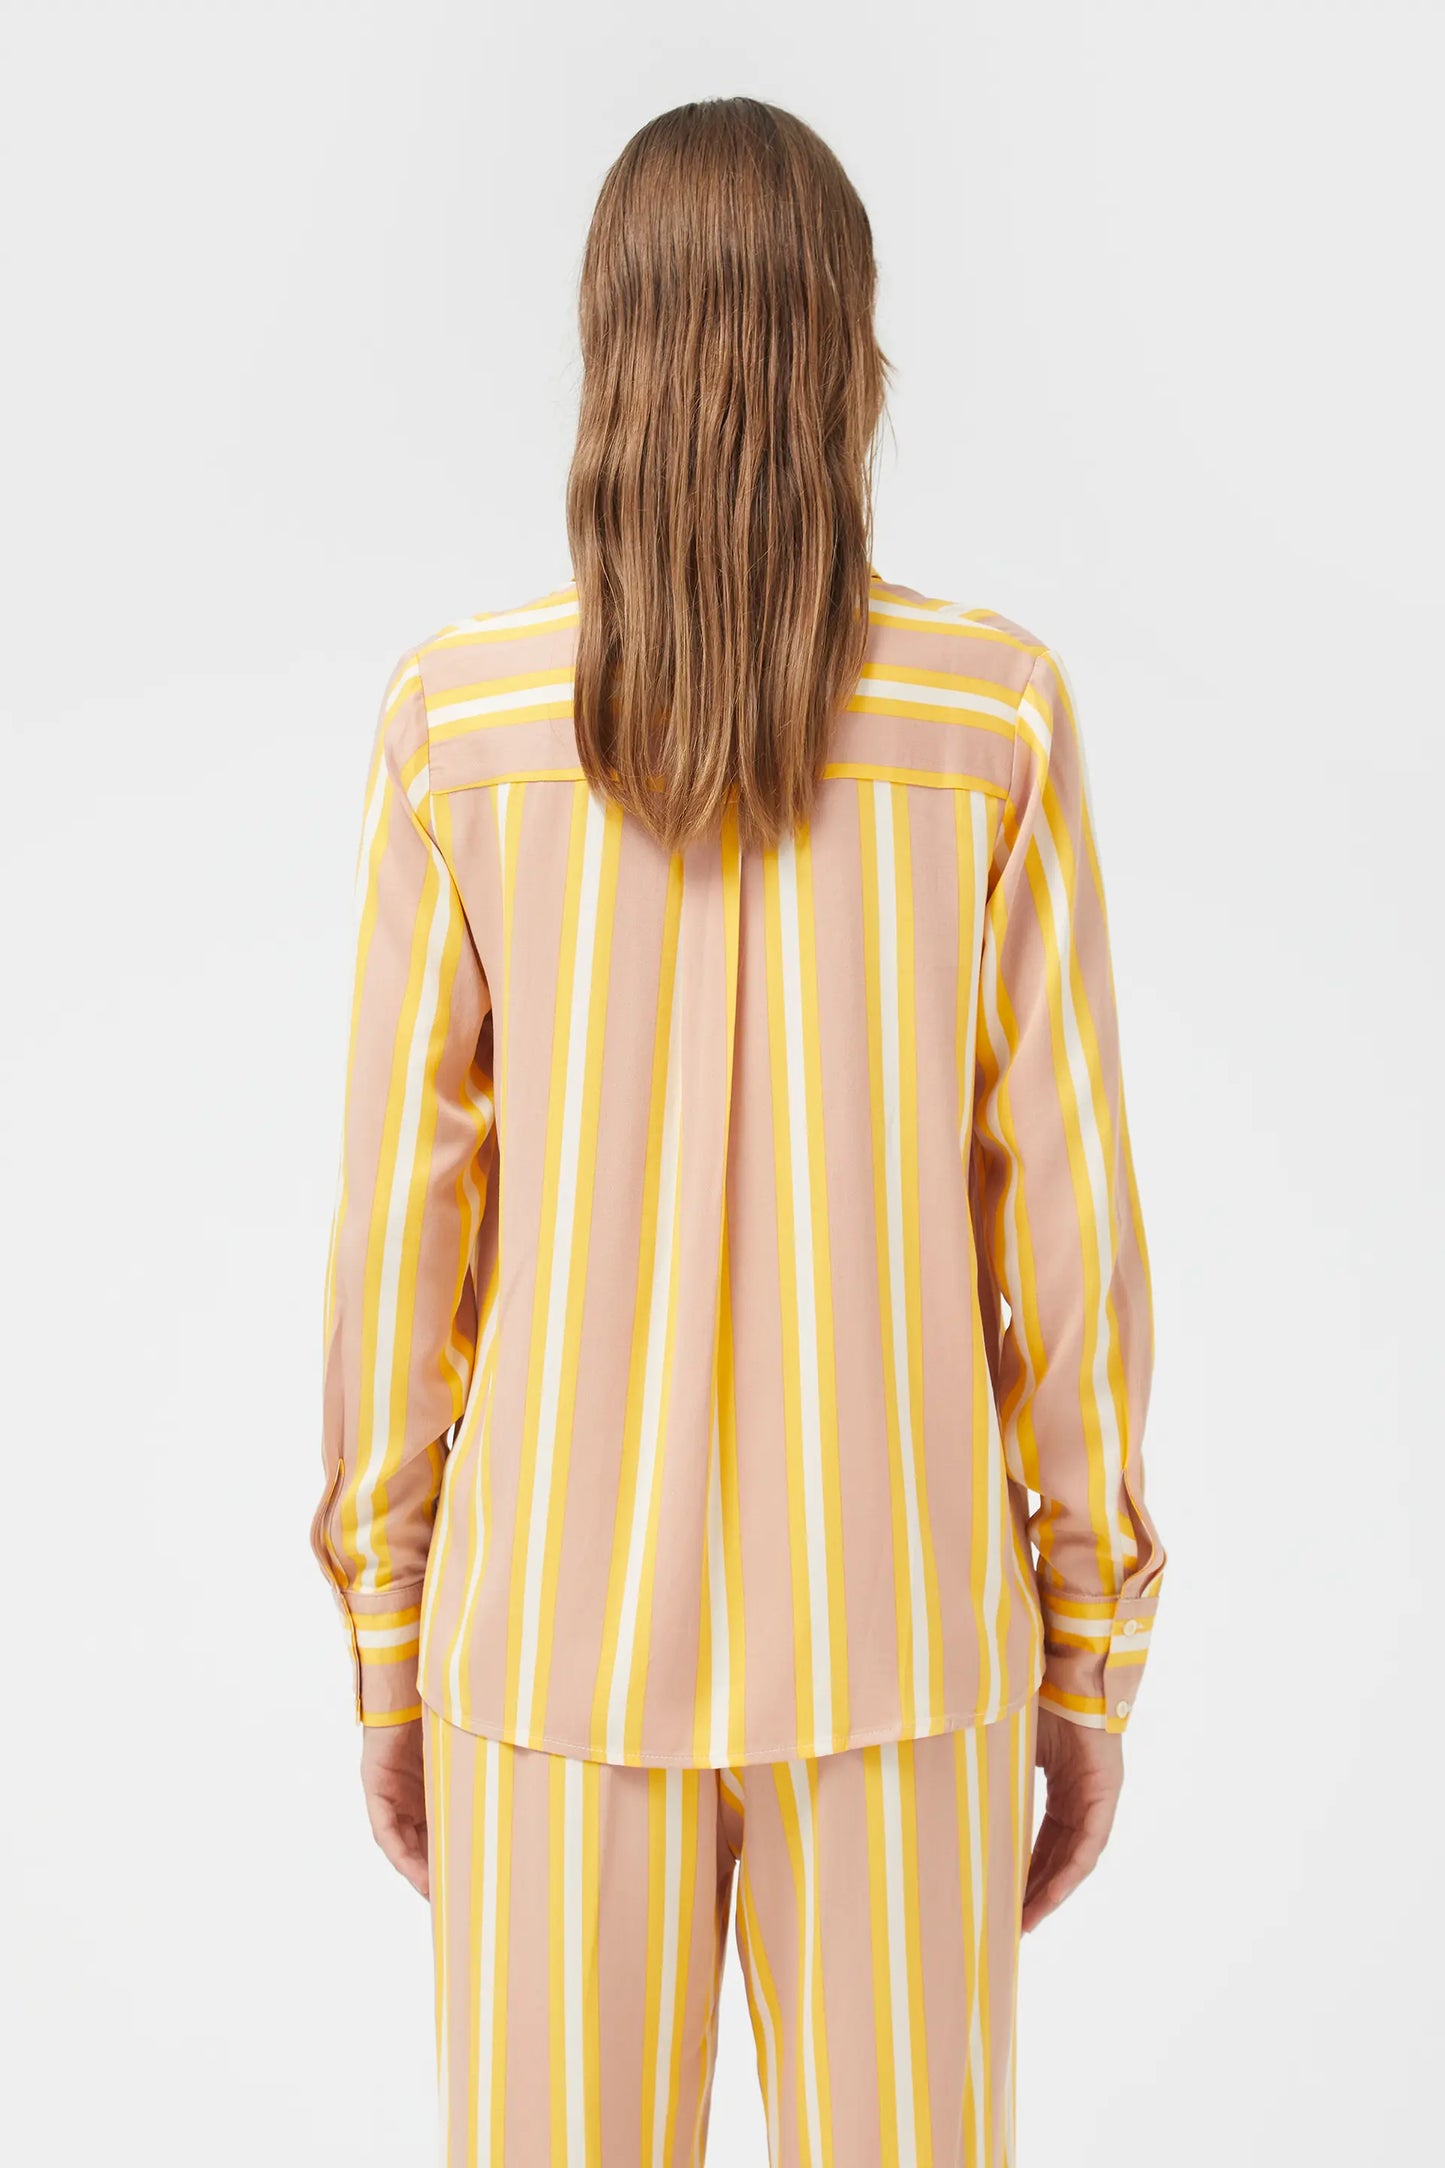 Yellow striped shirt